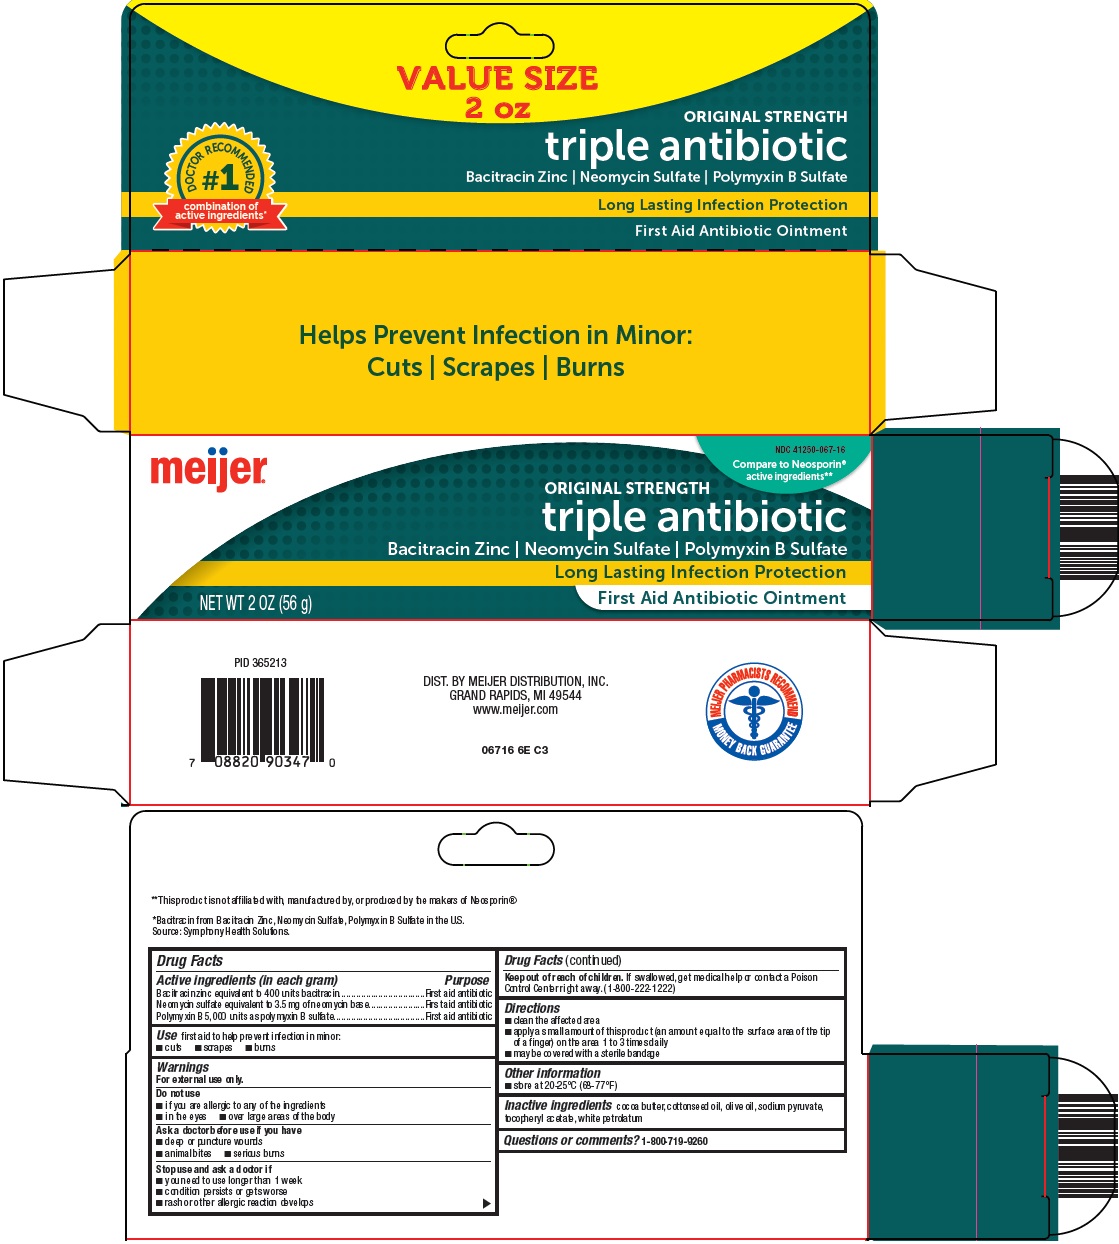 triple-antibiotic-image